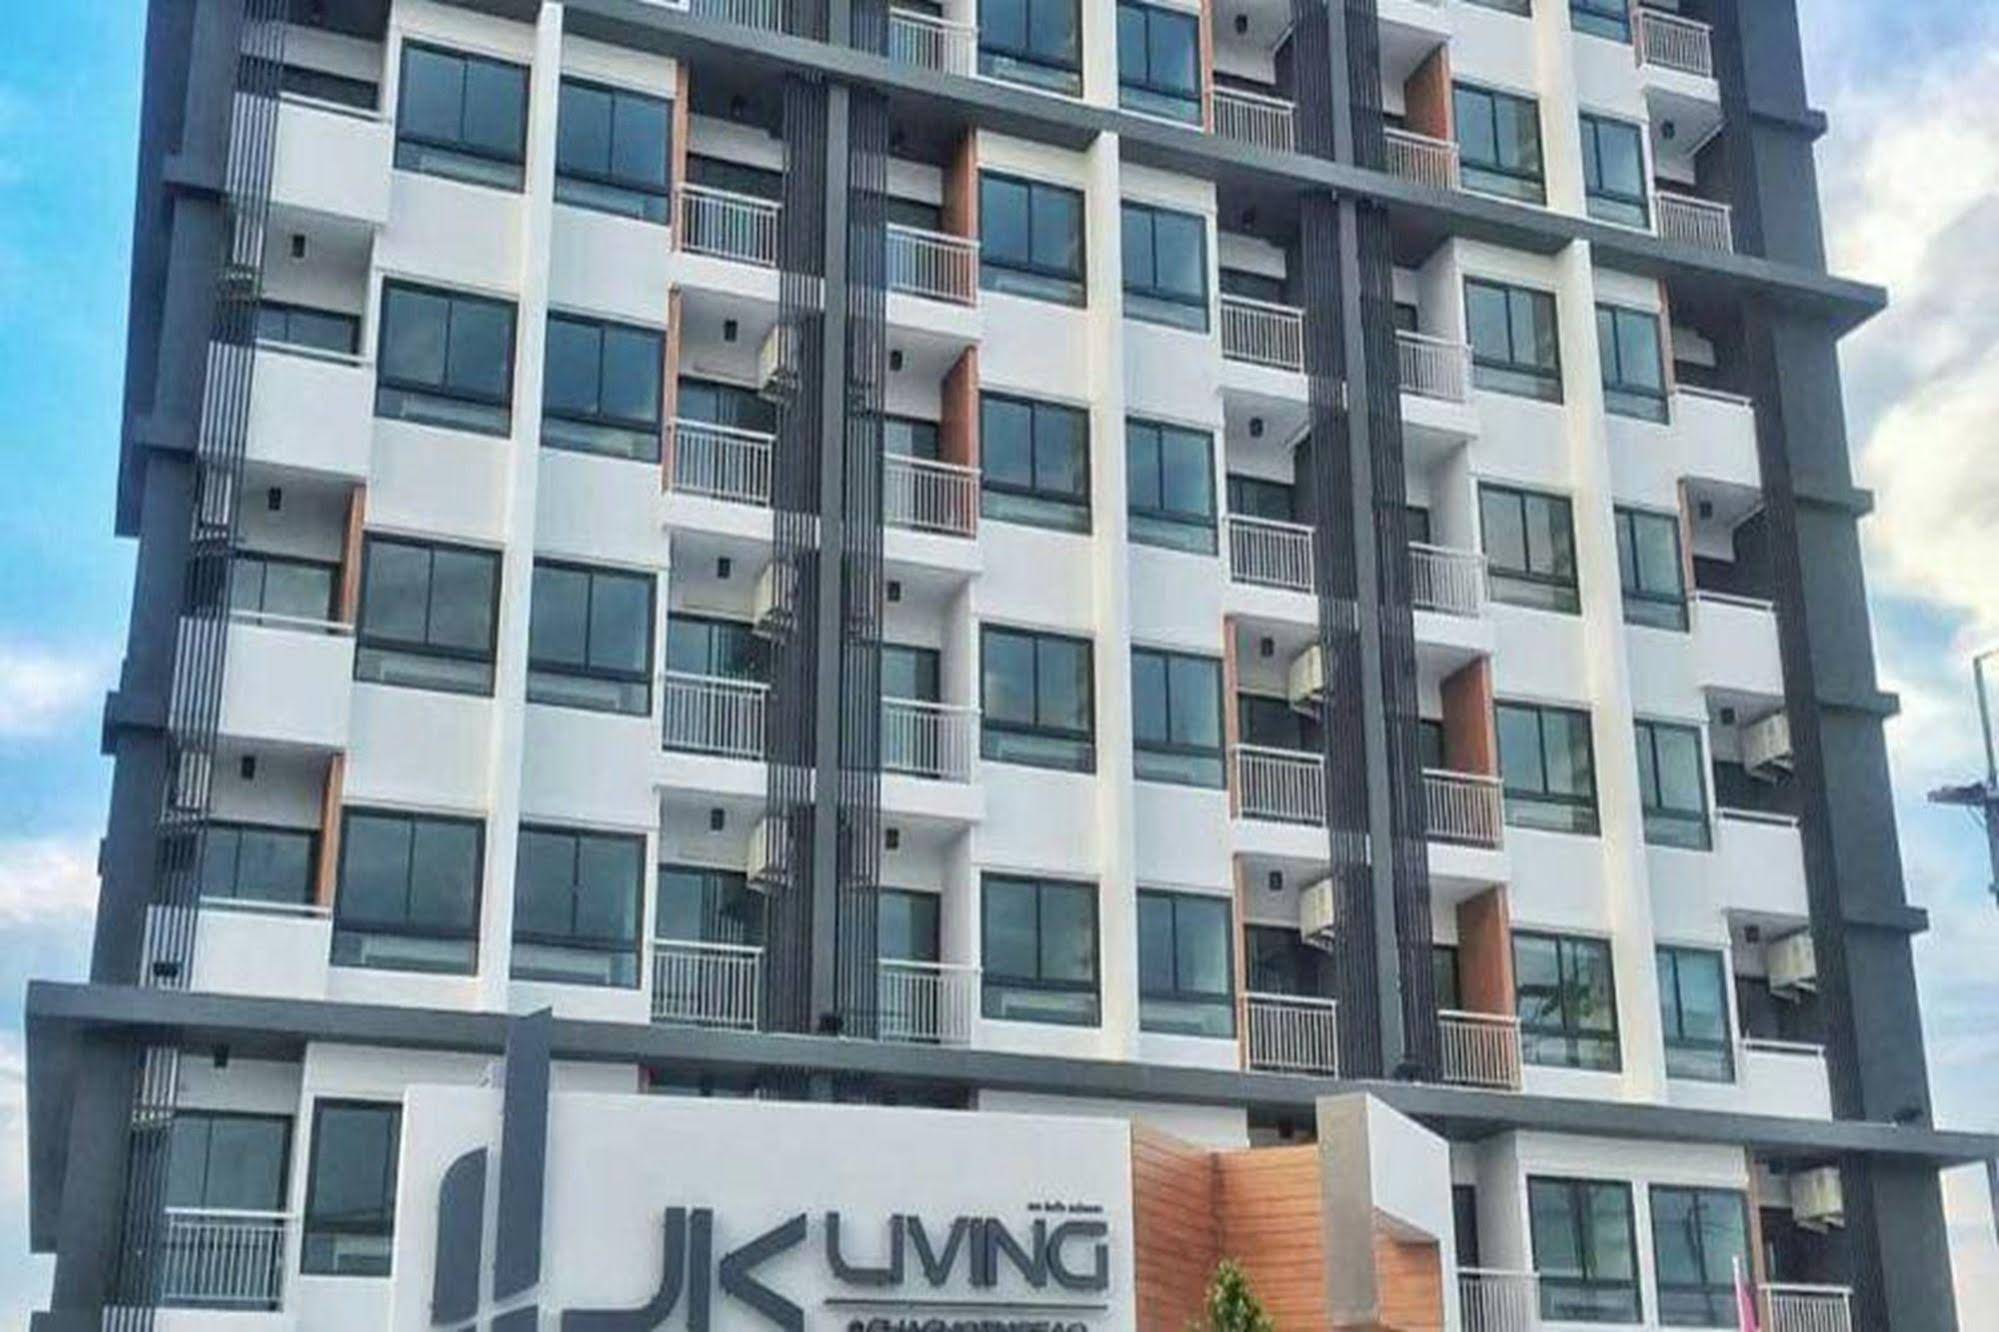 JK Living and Service Apartment